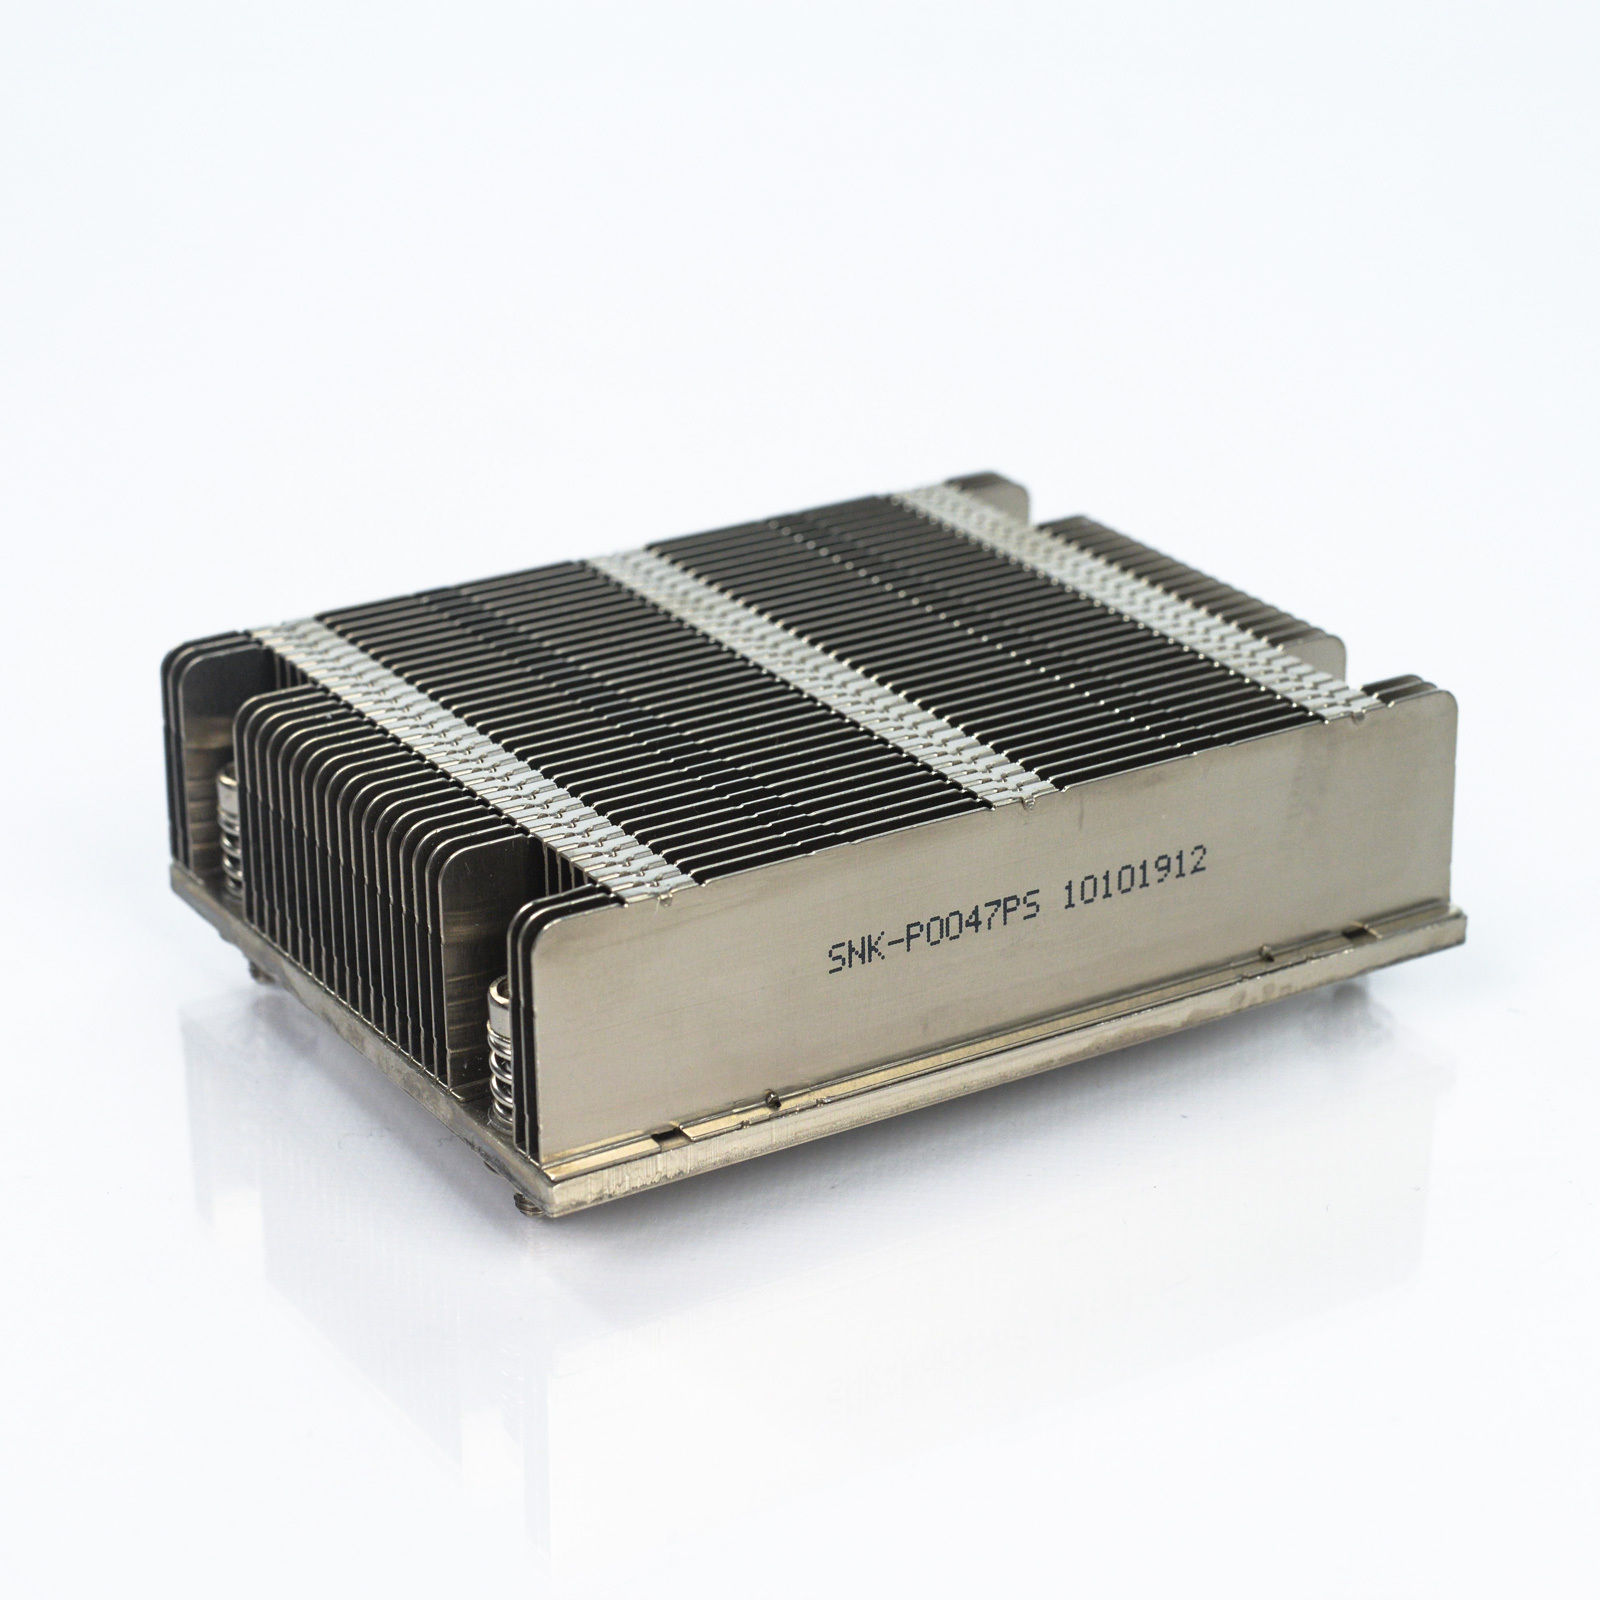 Supermicro 1U Heatsink Cooling for LGA 2011 SNK-P0047PS